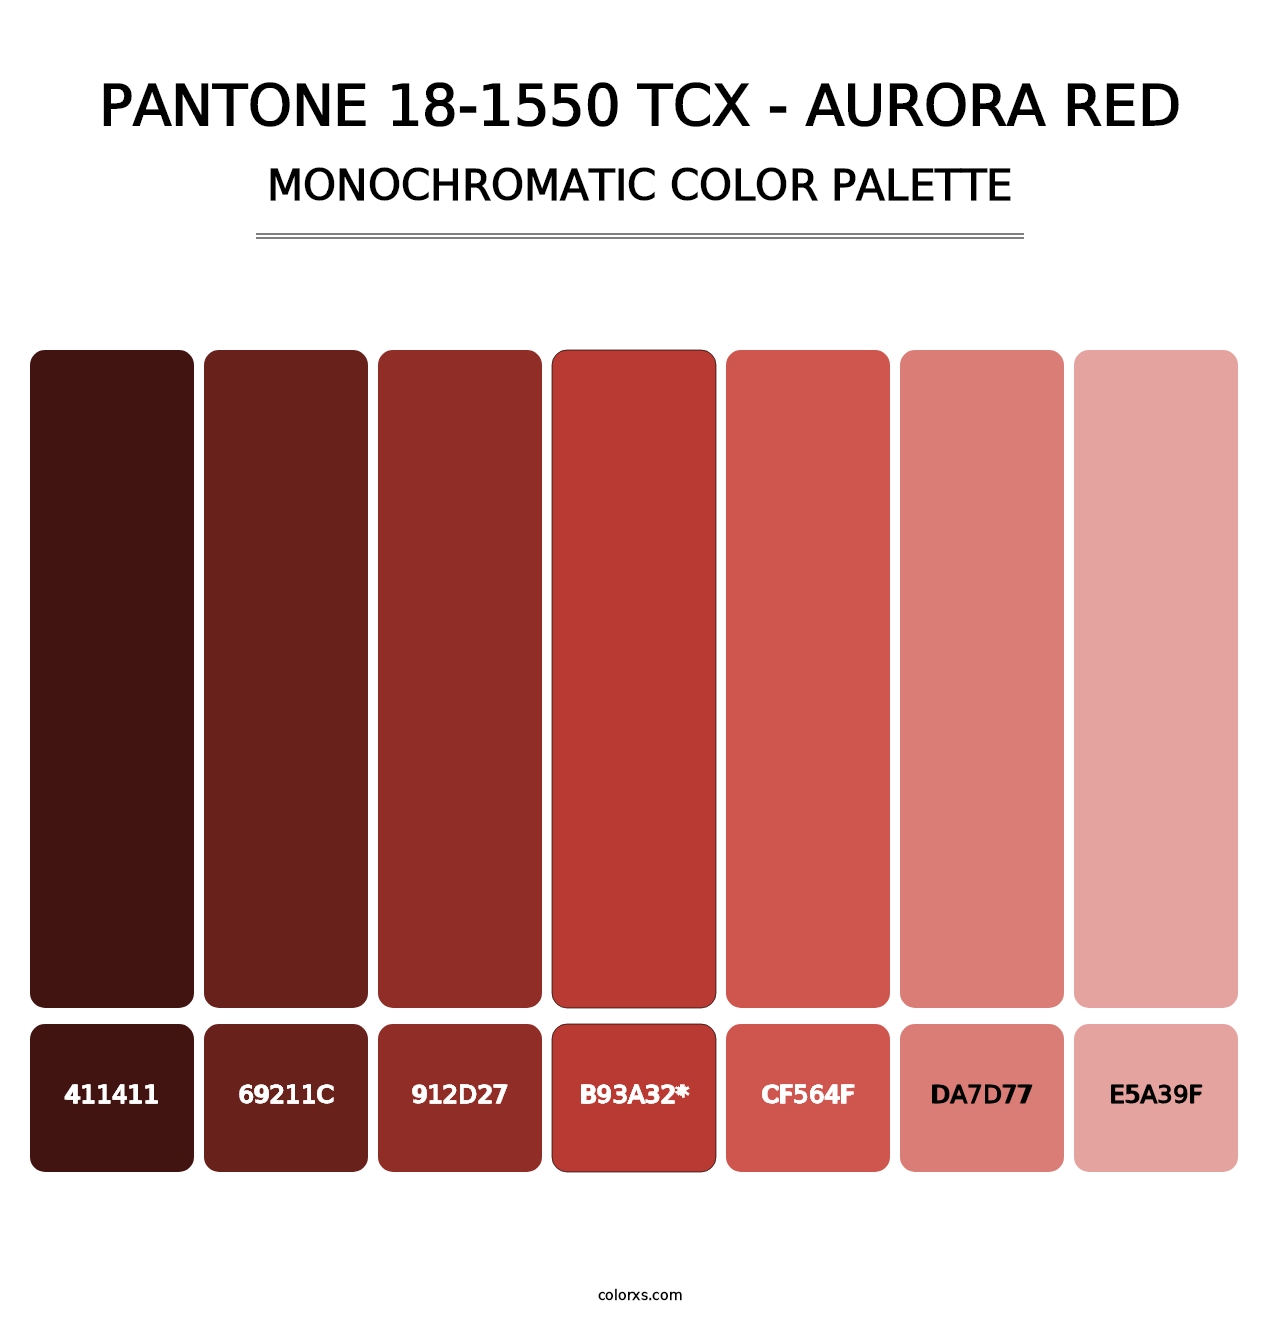 PANTONE 18-1550 TCX - Aurora Red - Monochromatic Color Palette